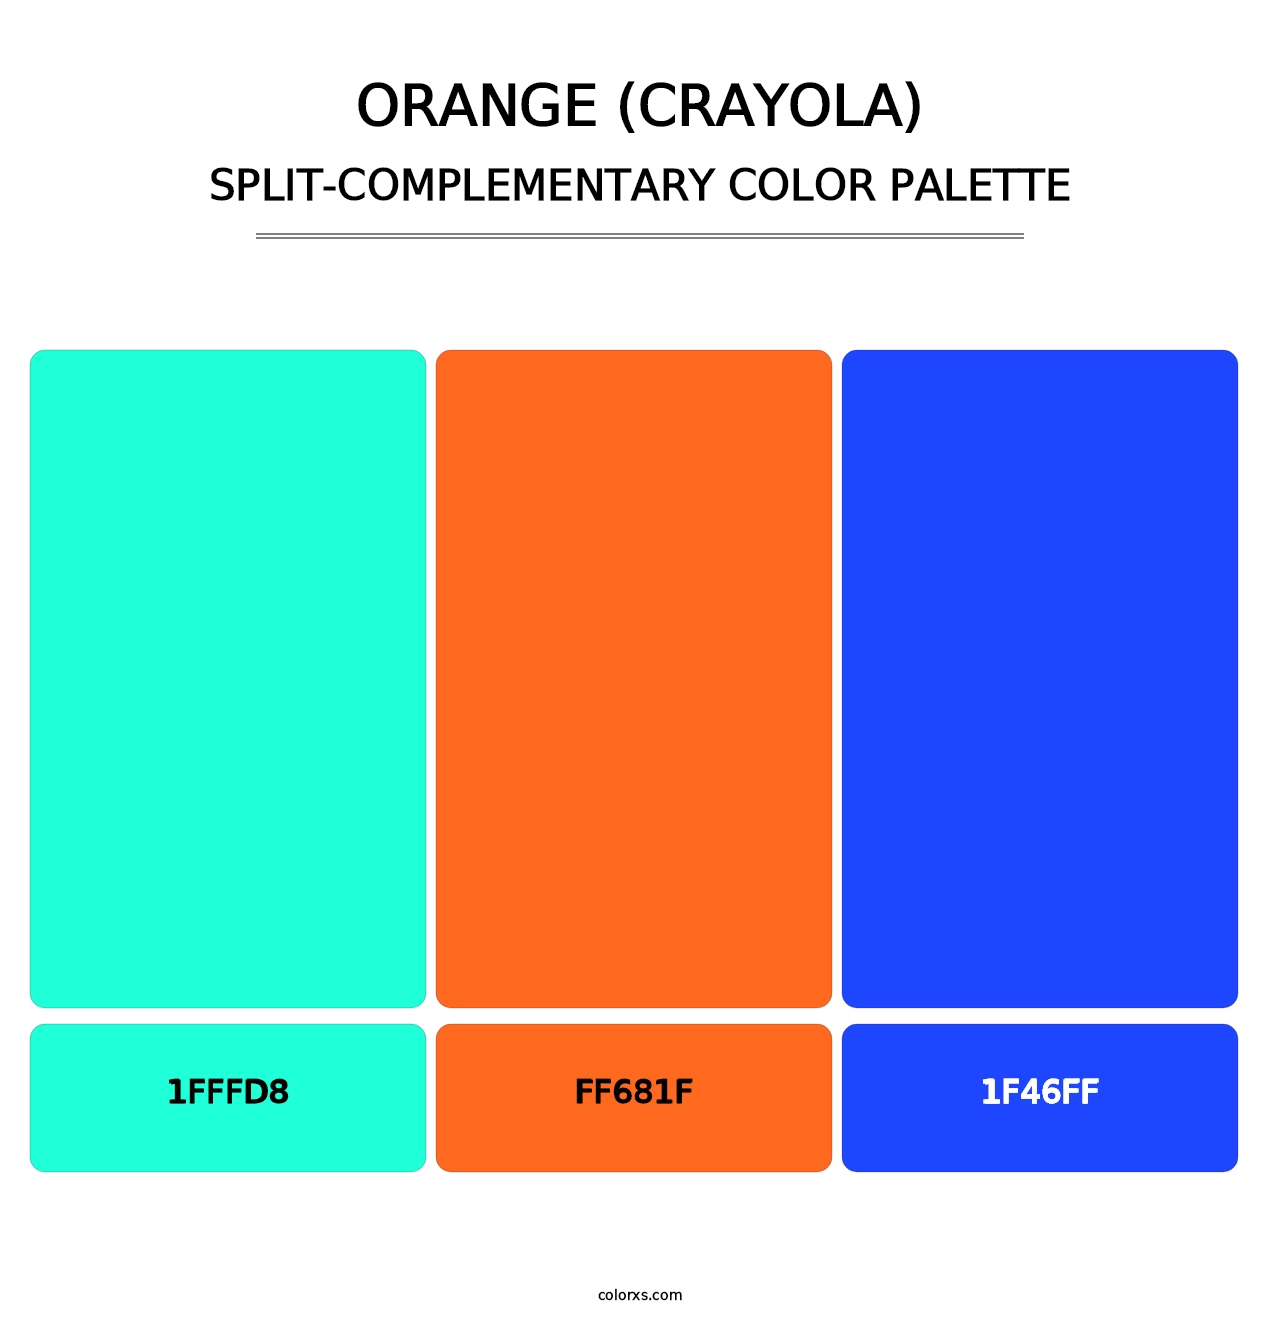 Orange (Crayola) - Split-Complementary Color Palette